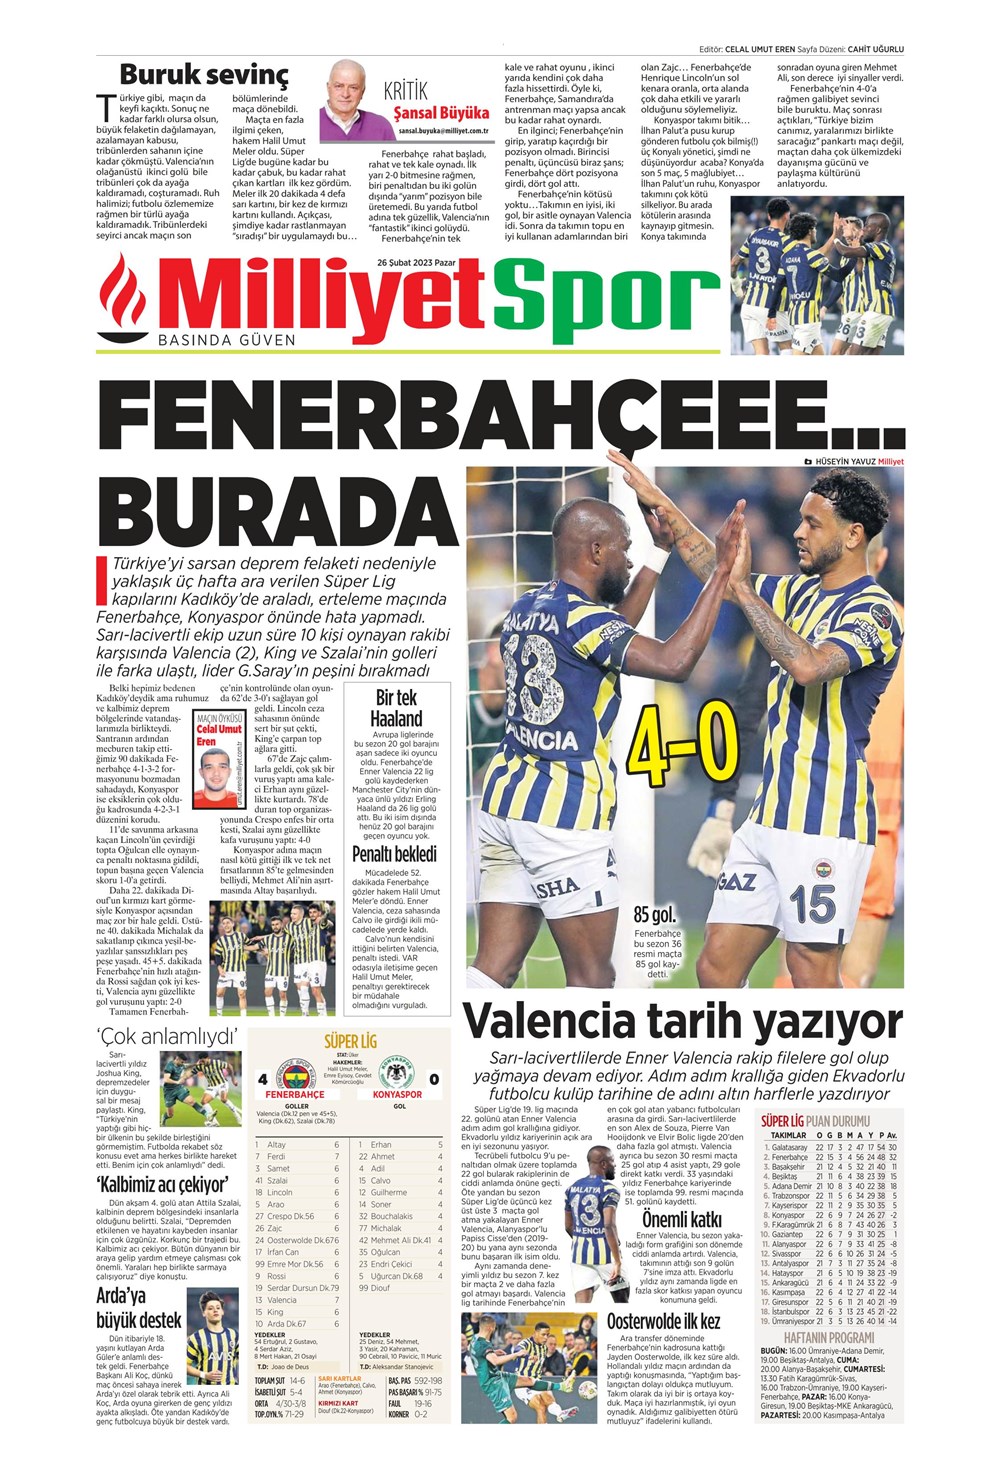 "Valenci'ağa' böyle istedi" - Sporun manşetleri  - 21. Foto